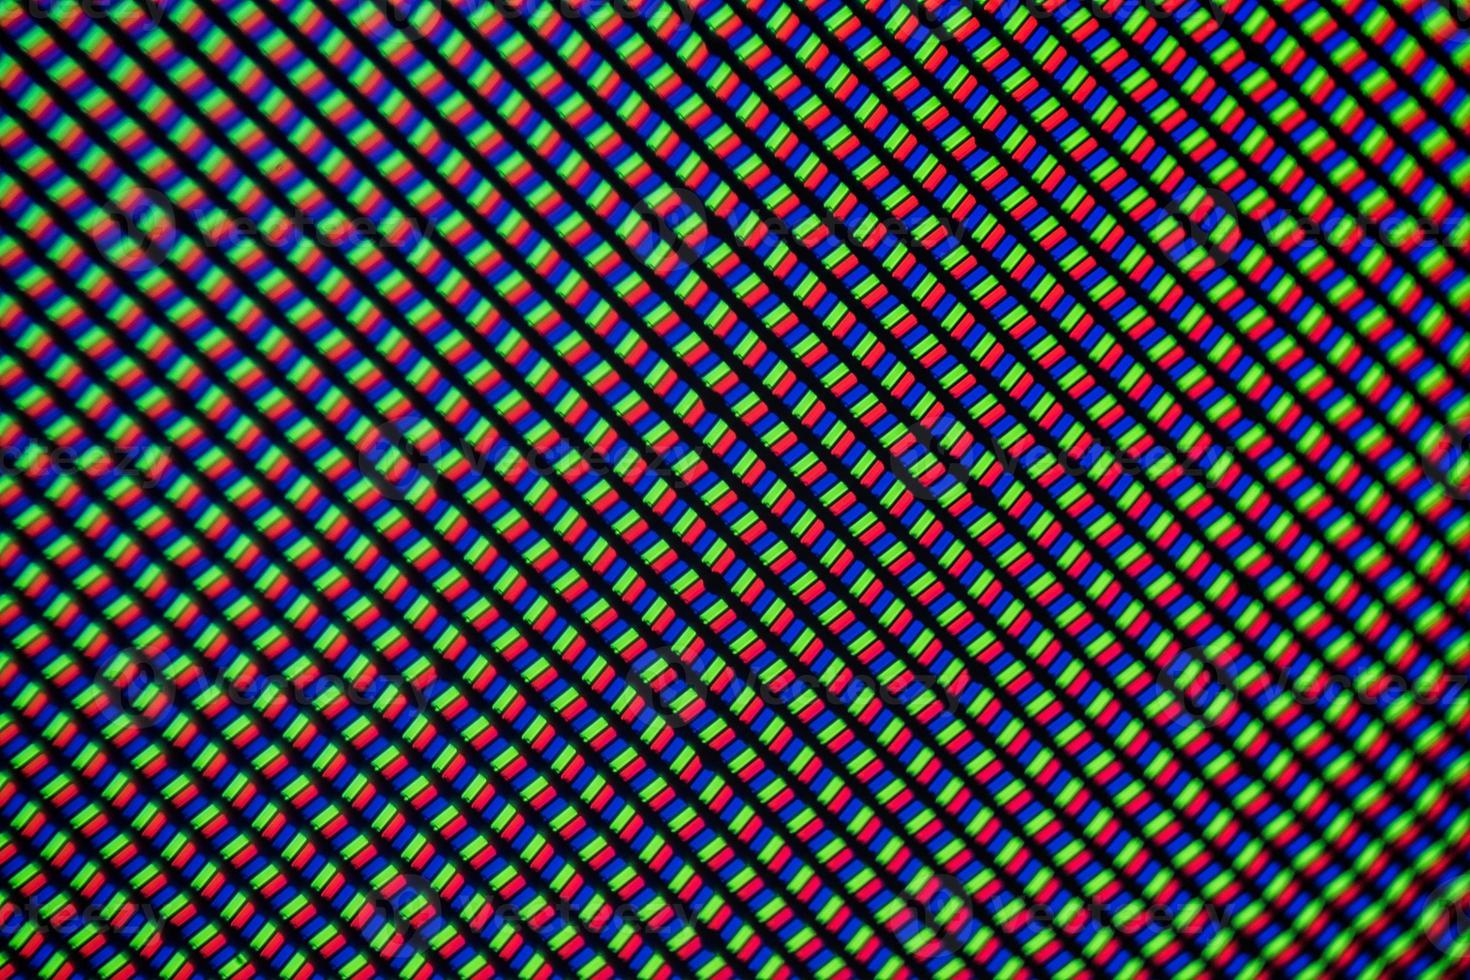 Light photomicrograph of a mobile LCD screen seen through a microscope photo